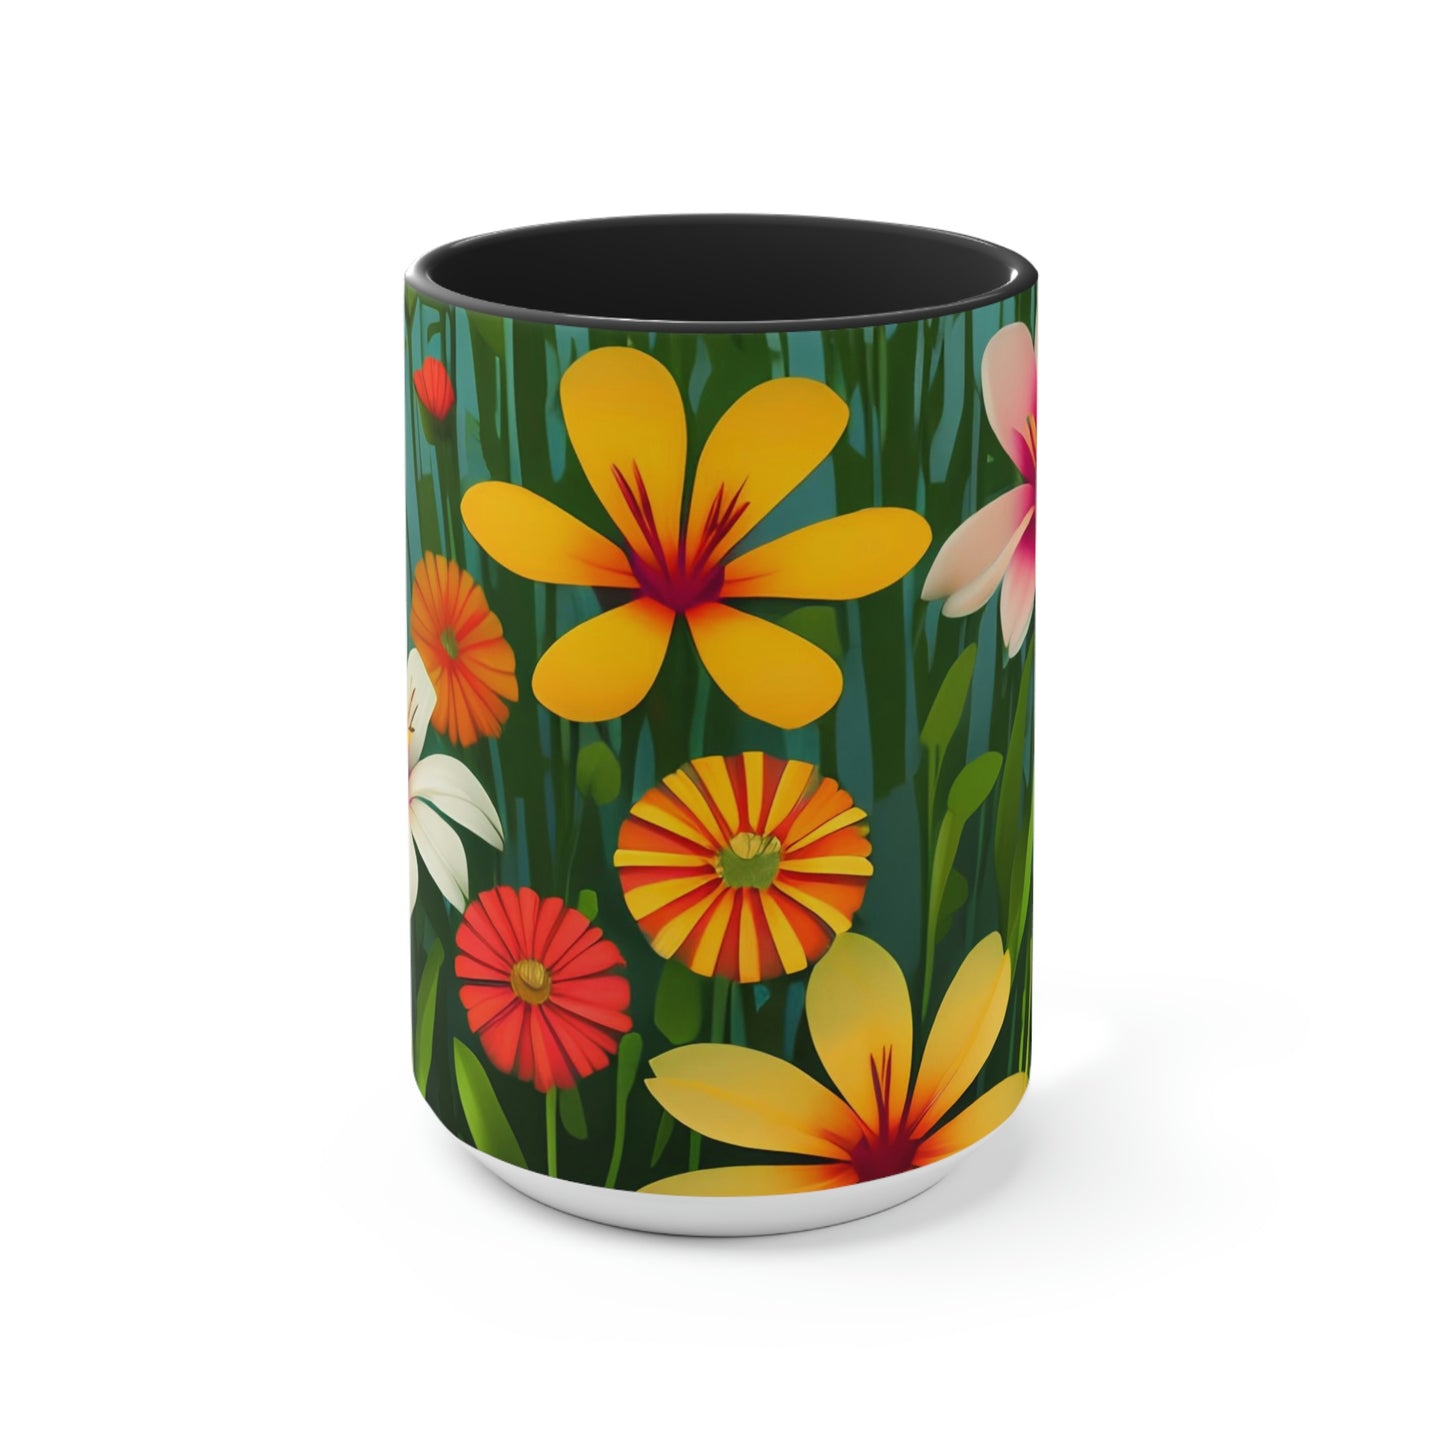 Wildflowers, Ceramic Mug - Perfect for Coffee, Tea, and More!